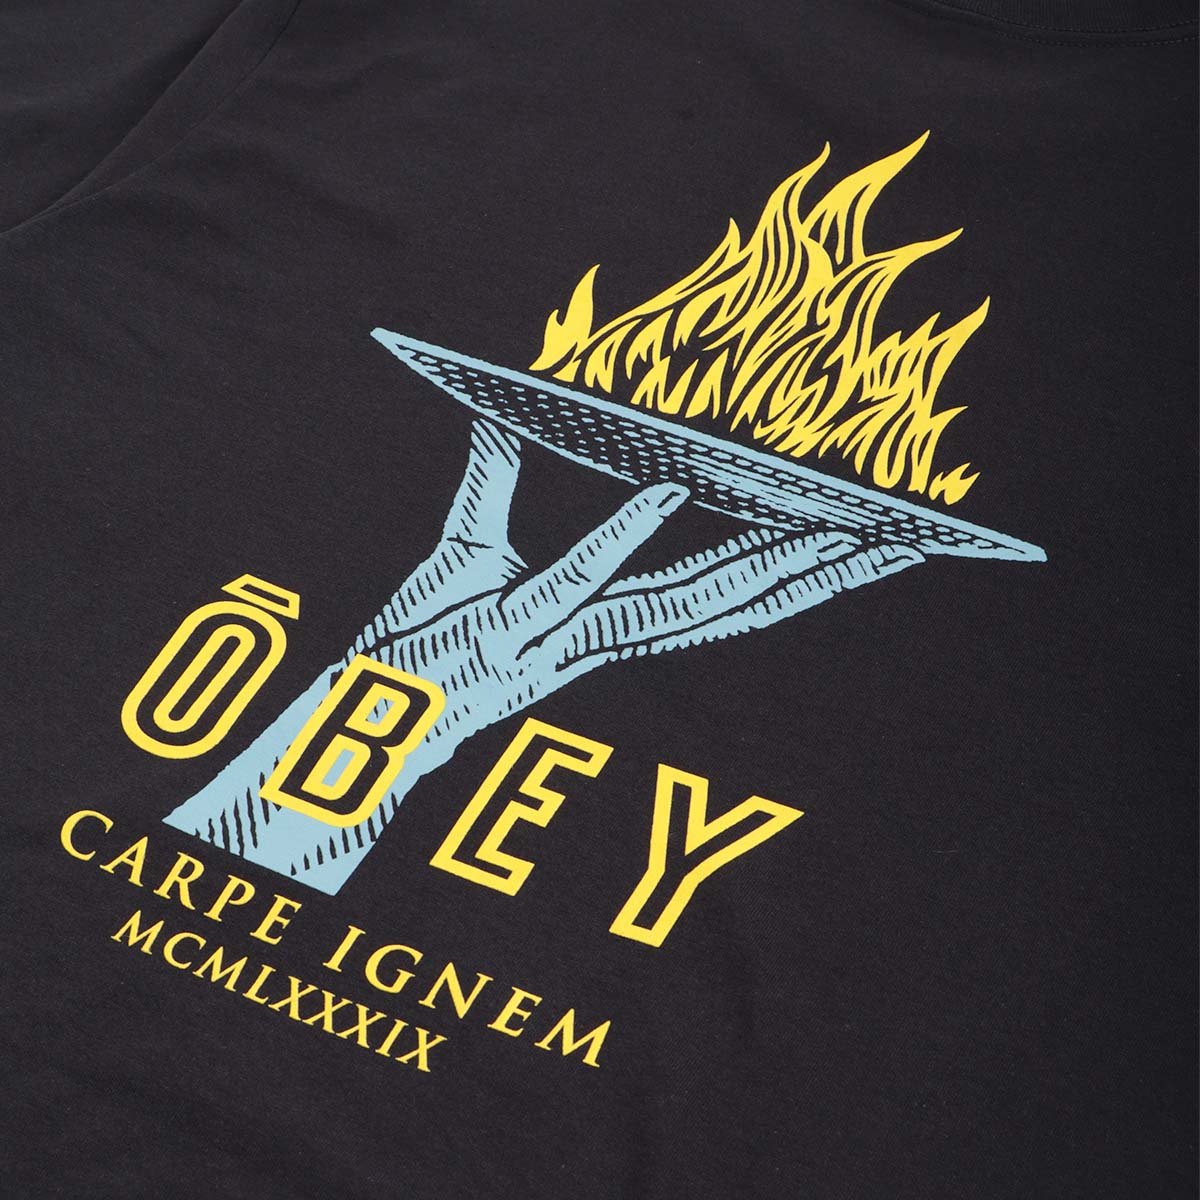 OBEY Seize Fire T-Shirt, Black, Detail Shot 4